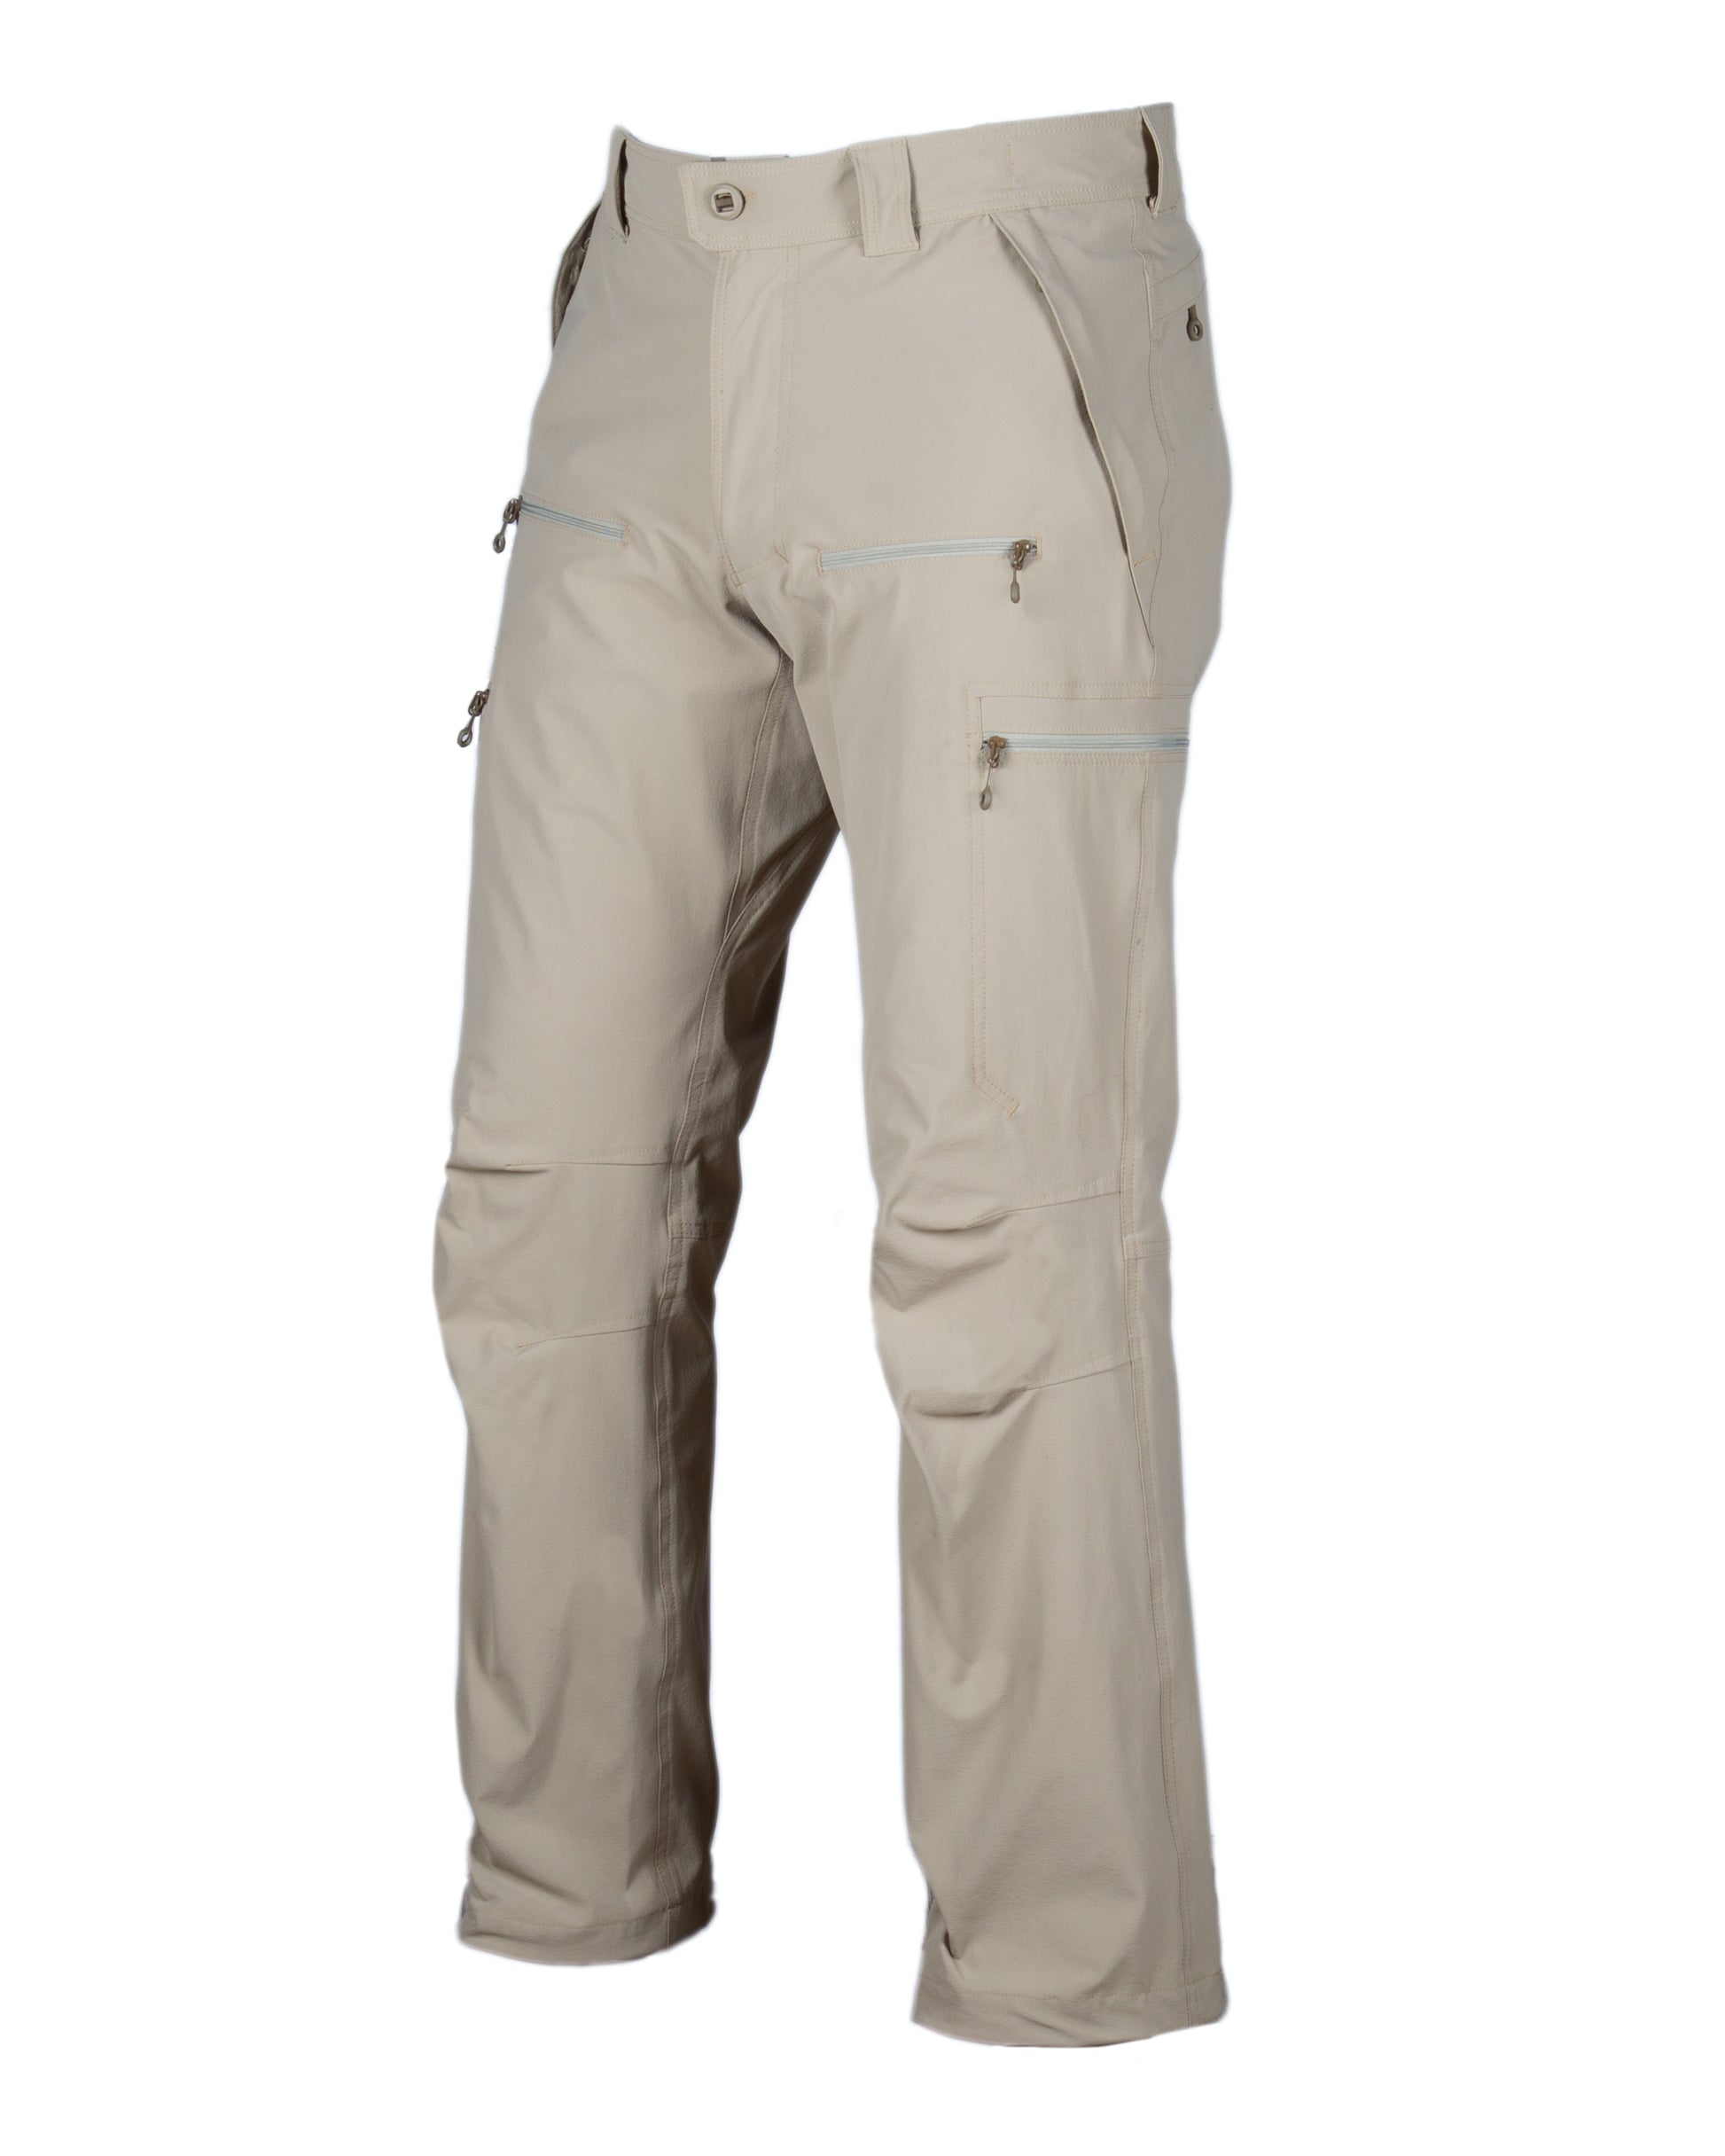 L5 - Velox Light Softshell Pant - Beyond Clothing USA 